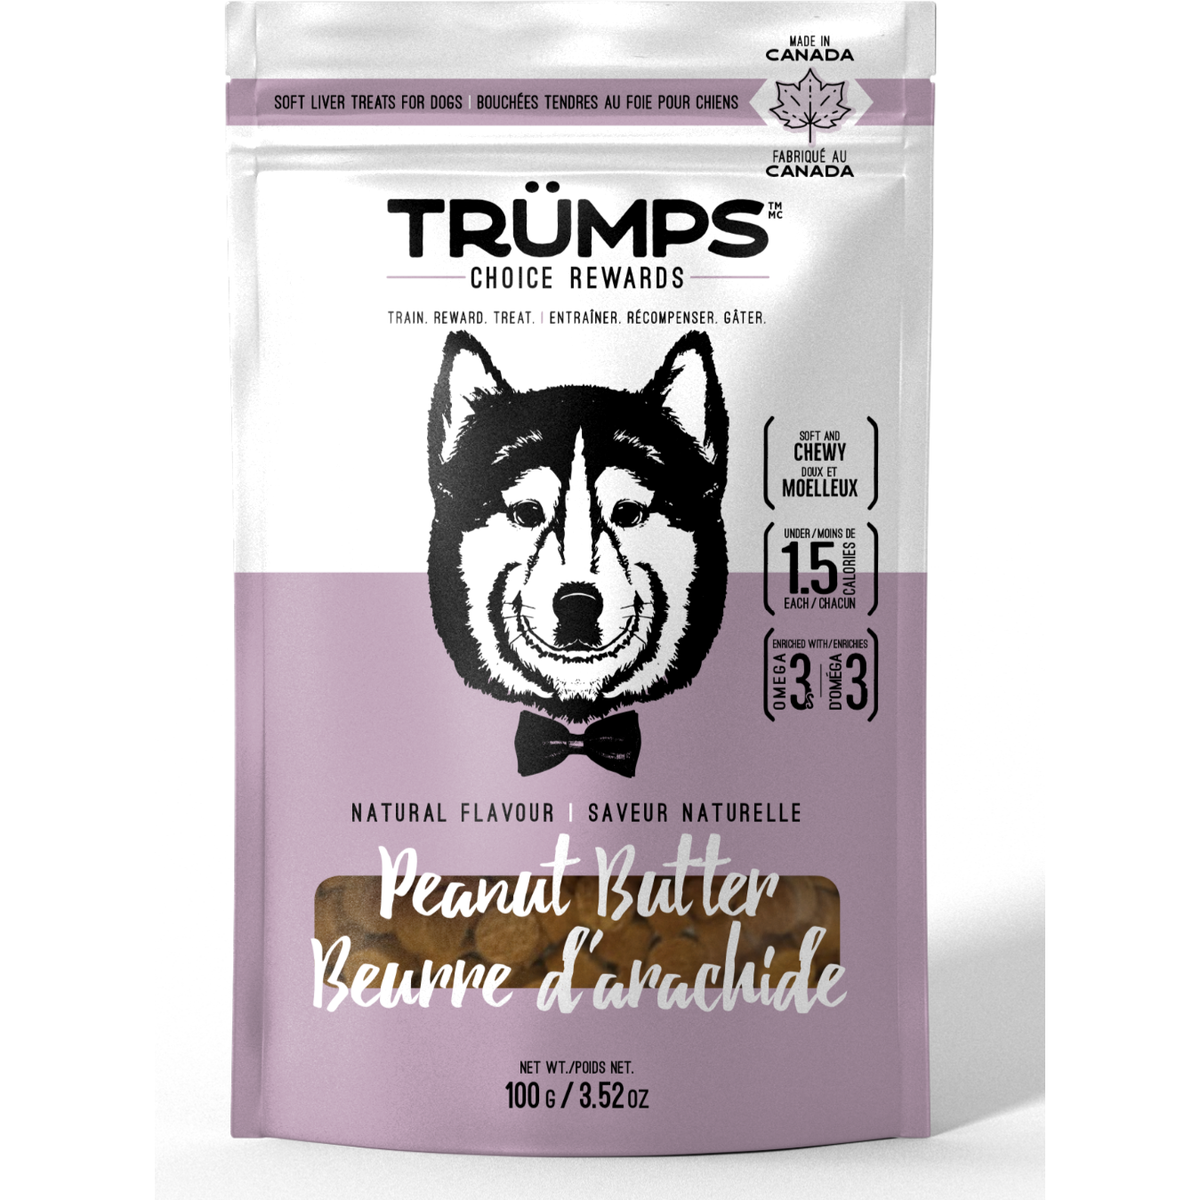 Trumps Choice Rewards Dog Treats - Natural Peanut Butter (100g)